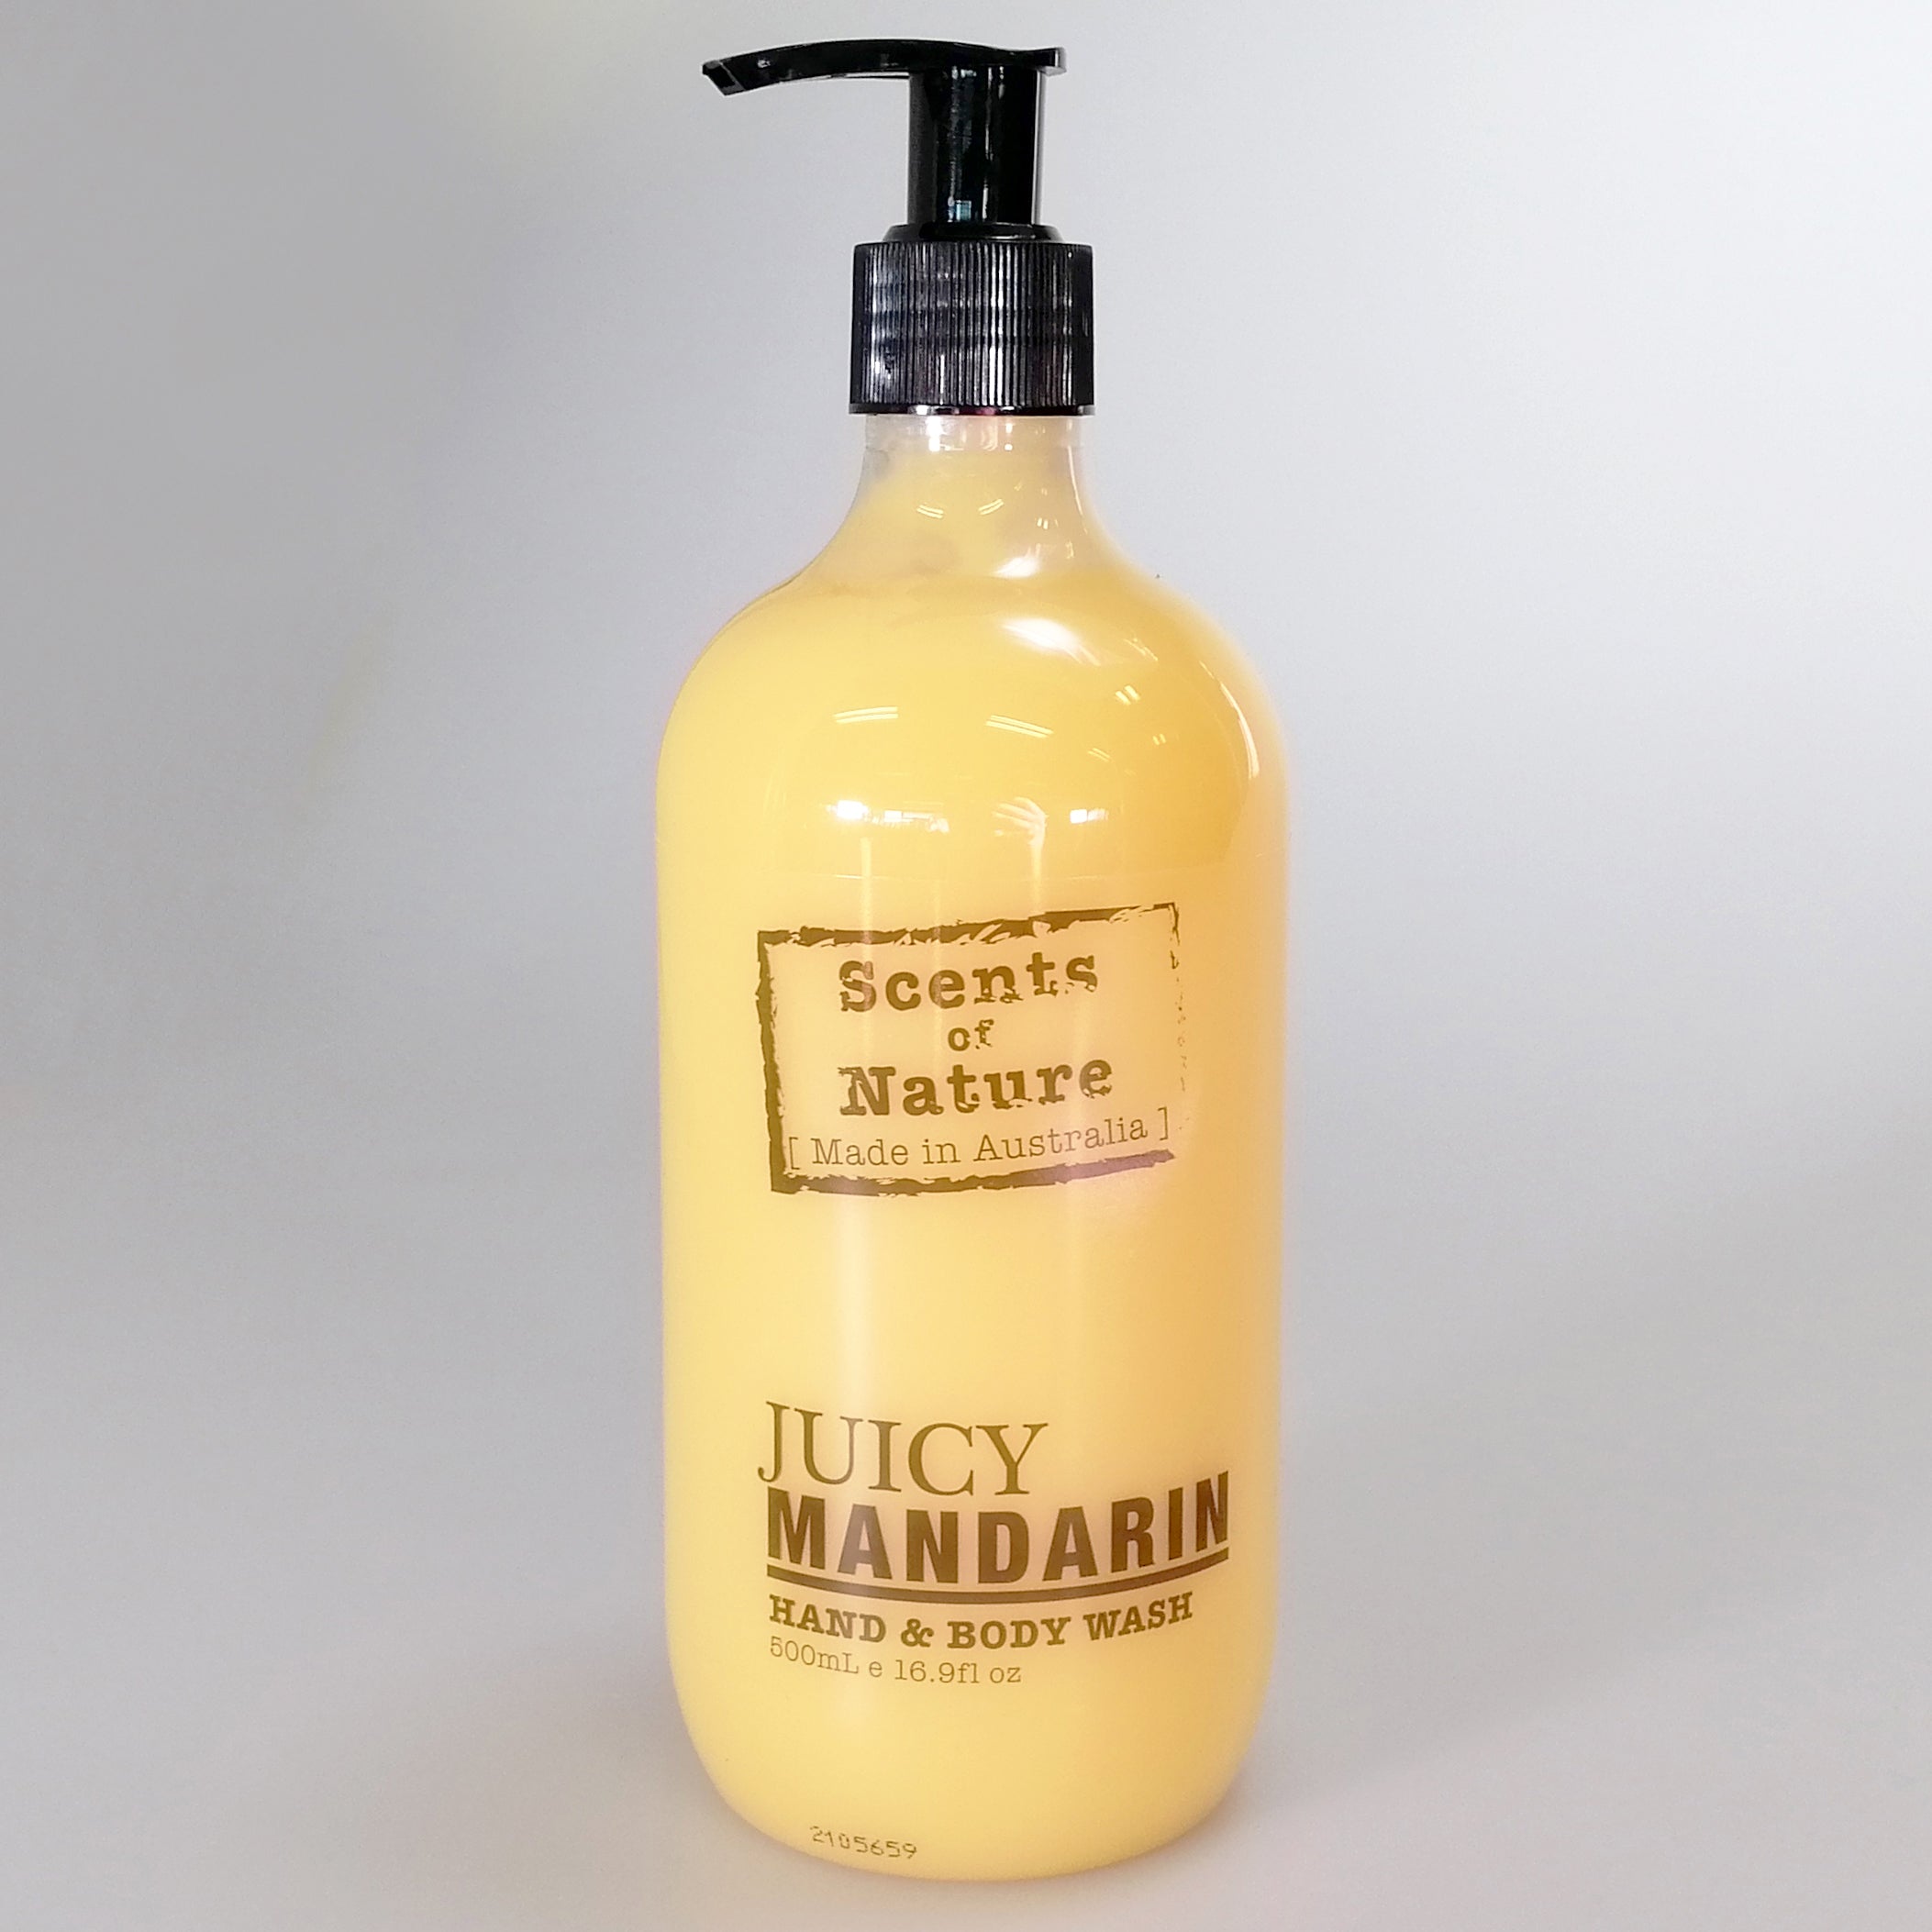 Hand & Body Wash - Juicy Mandarin - 500ml